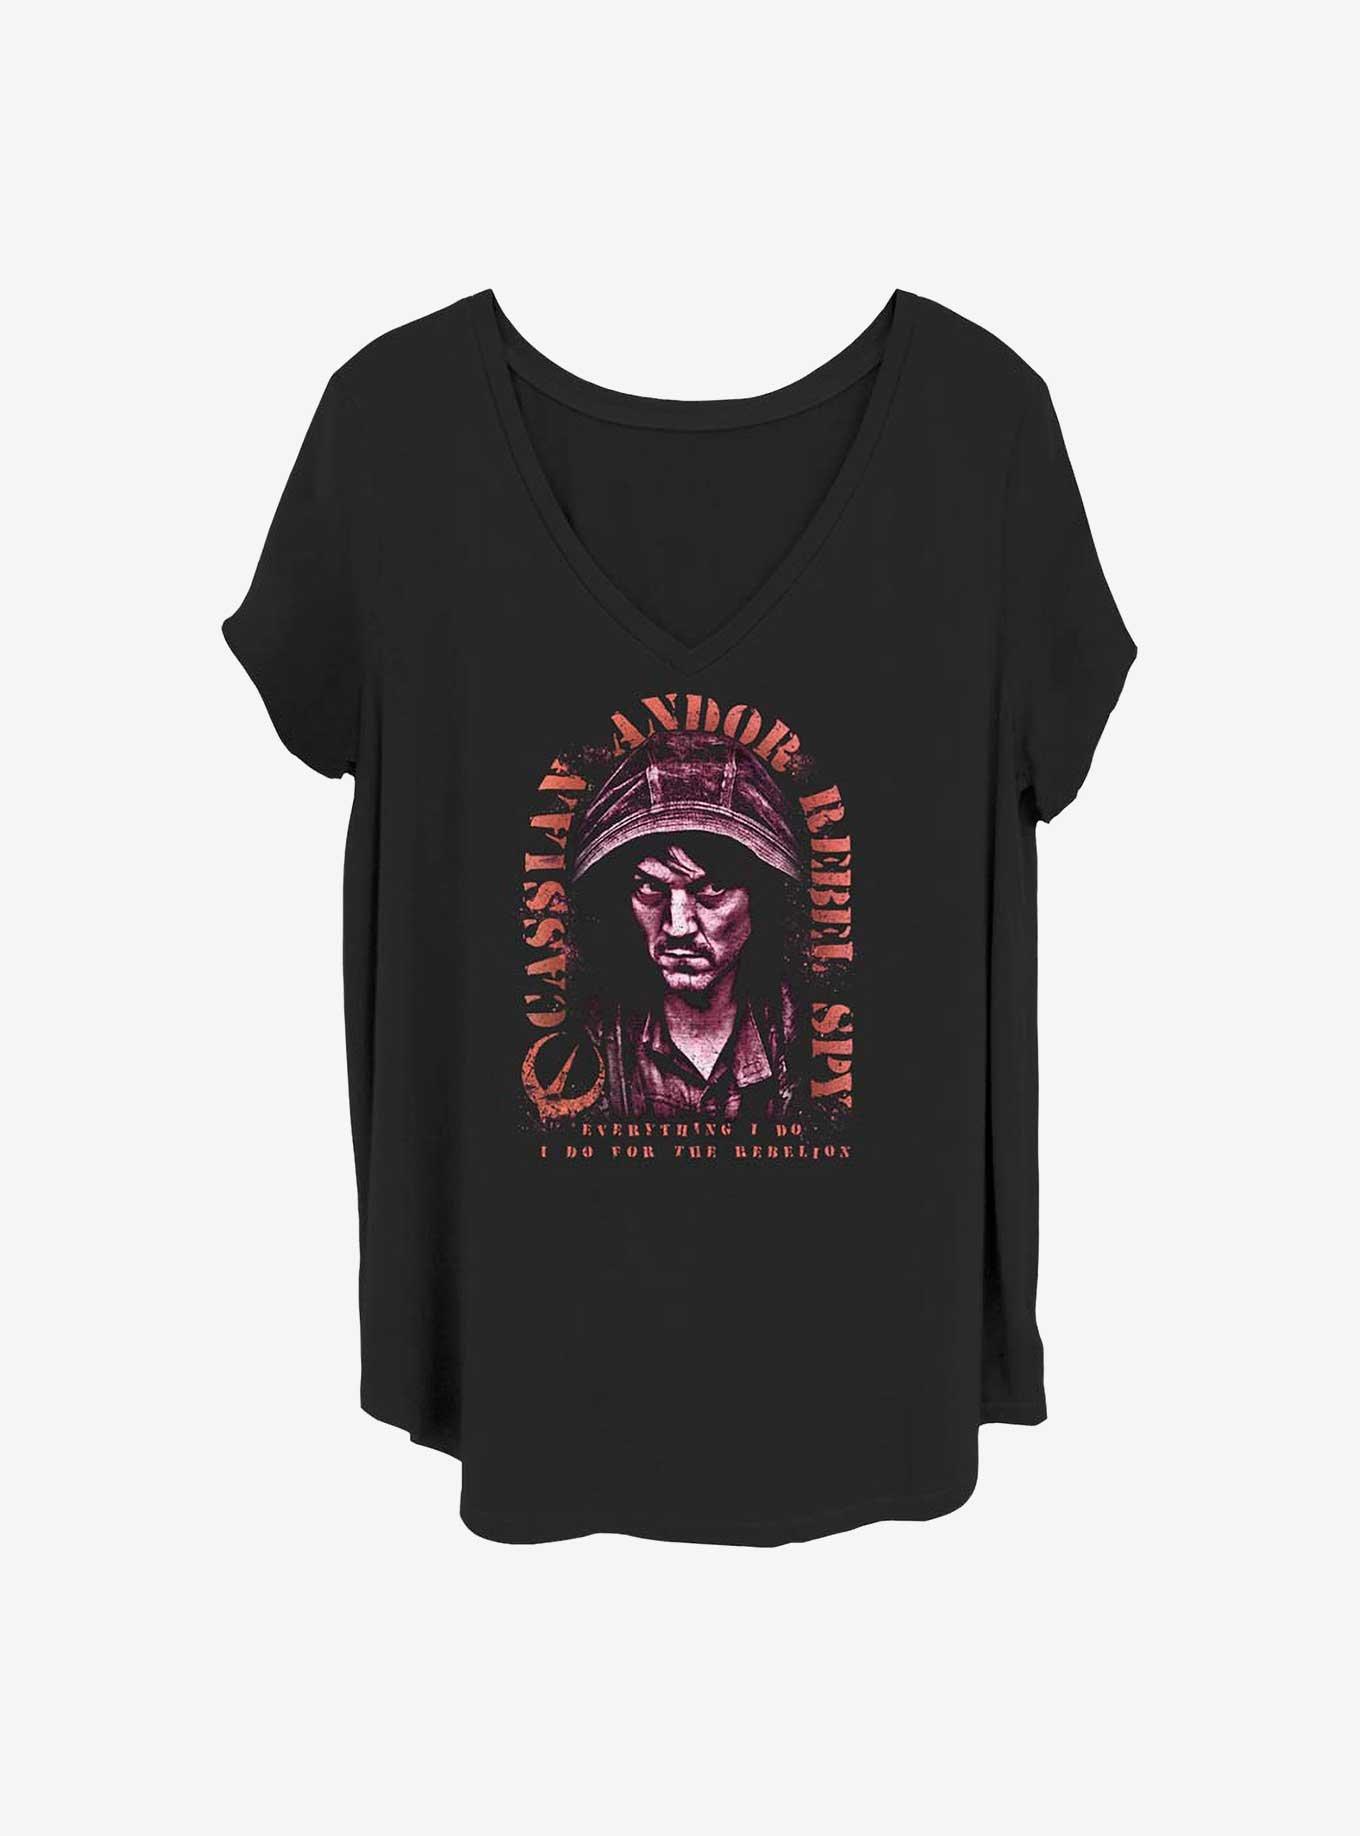 Star Wars Cassian Andor Rebel Spy Girls T-Shirt Plus